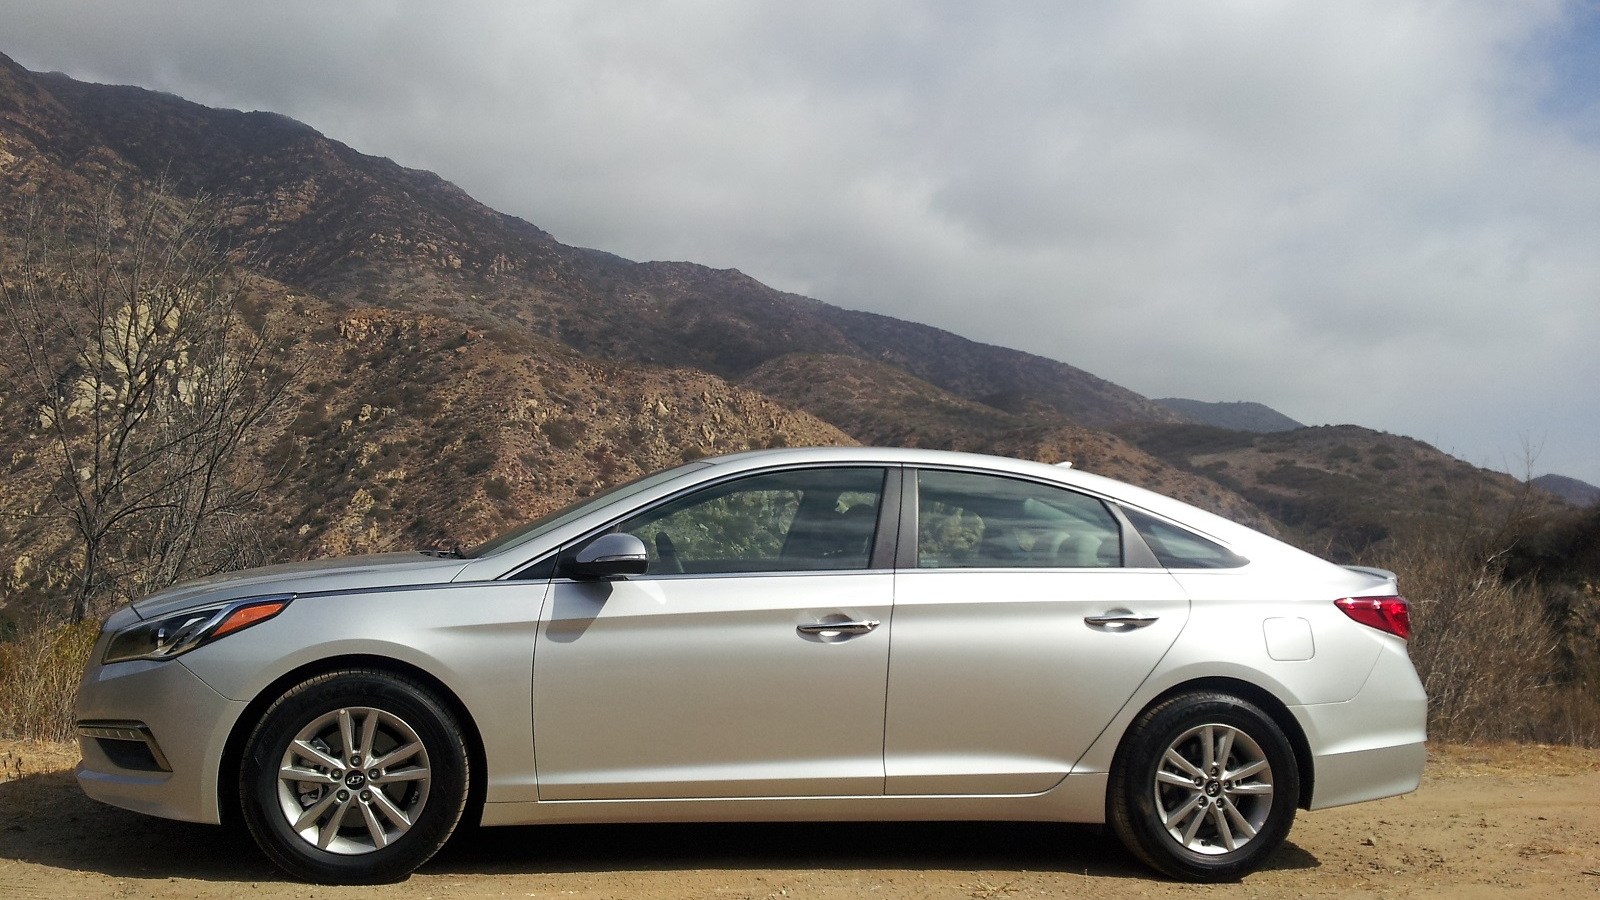 2015 Hyundai Sonata Eco, Malibu, California, Oct 2014